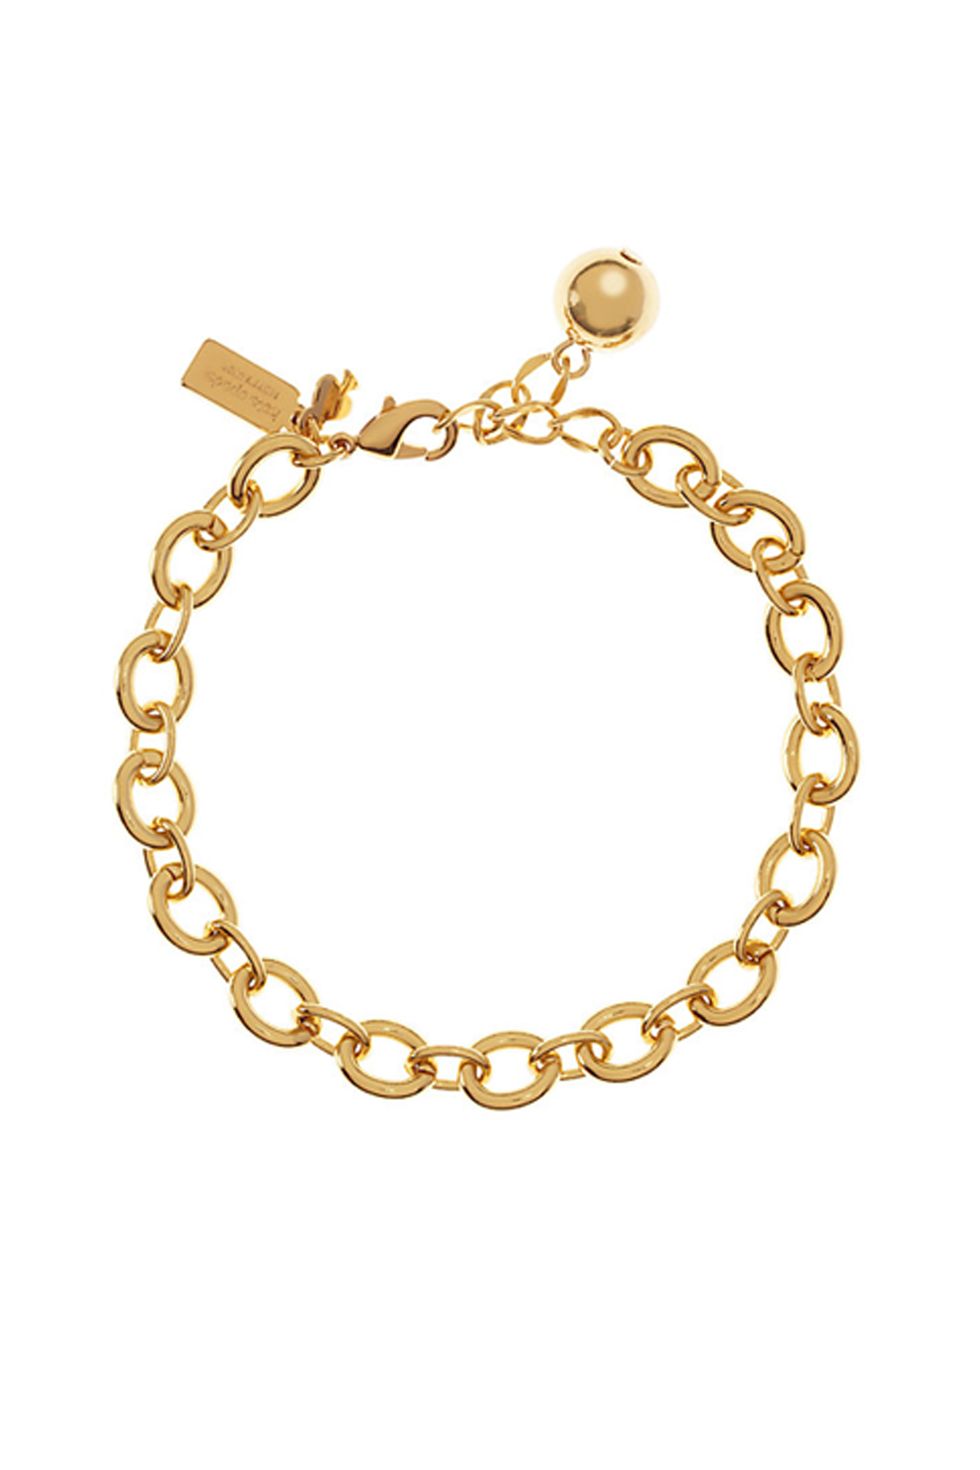 19 Cute Charm Bracelets for Women - Best Designer Charm Bracelets